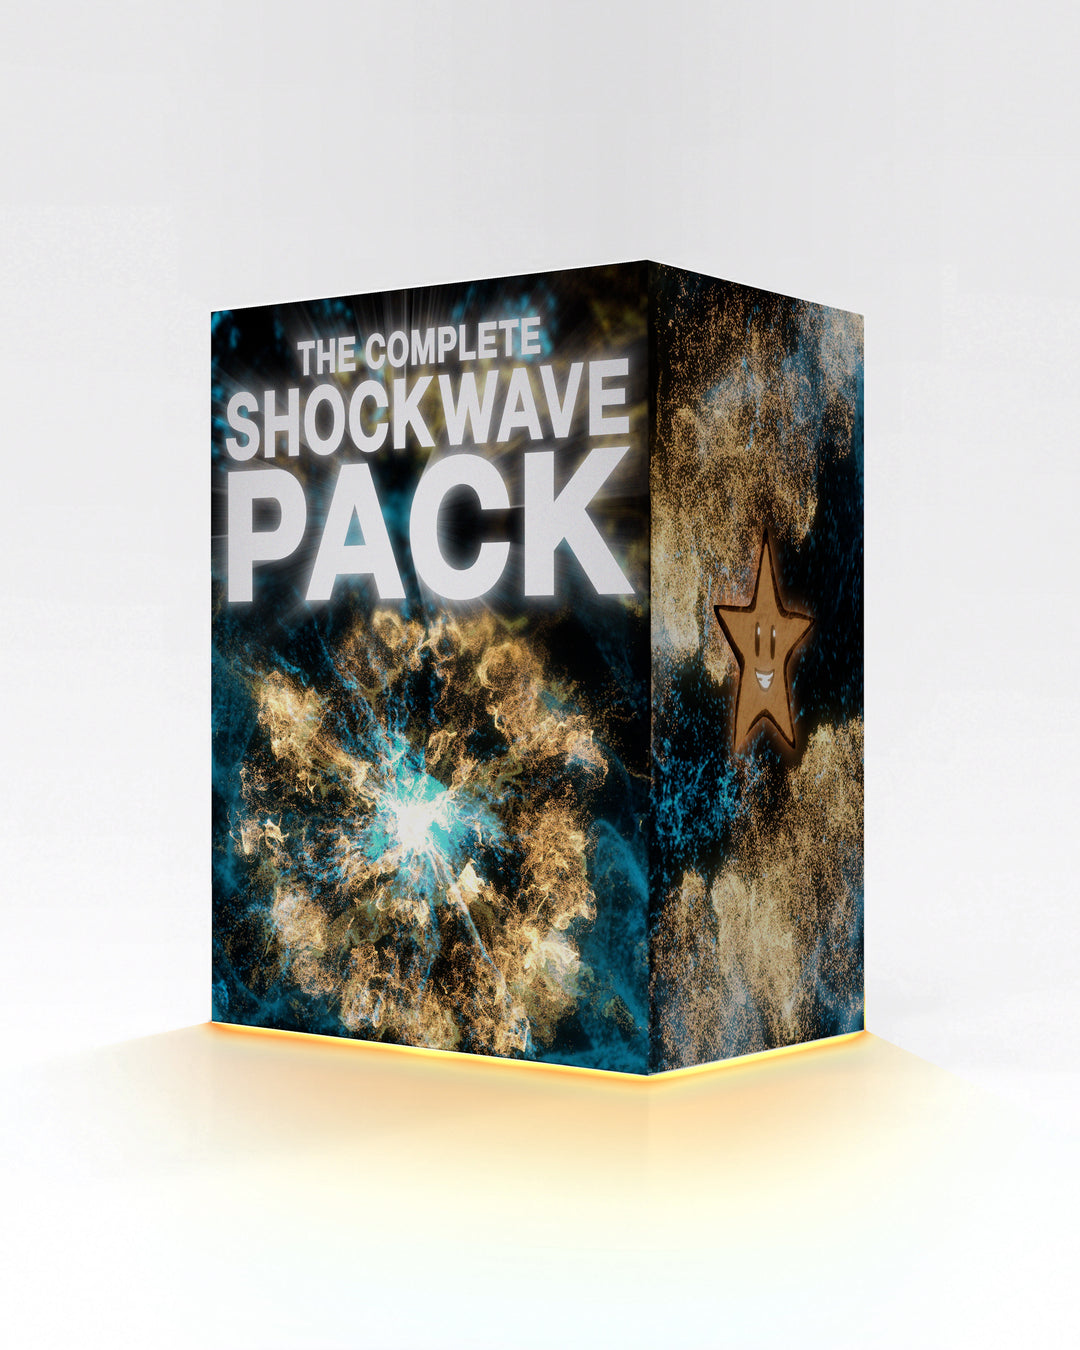 The Complete Shockwave Pack